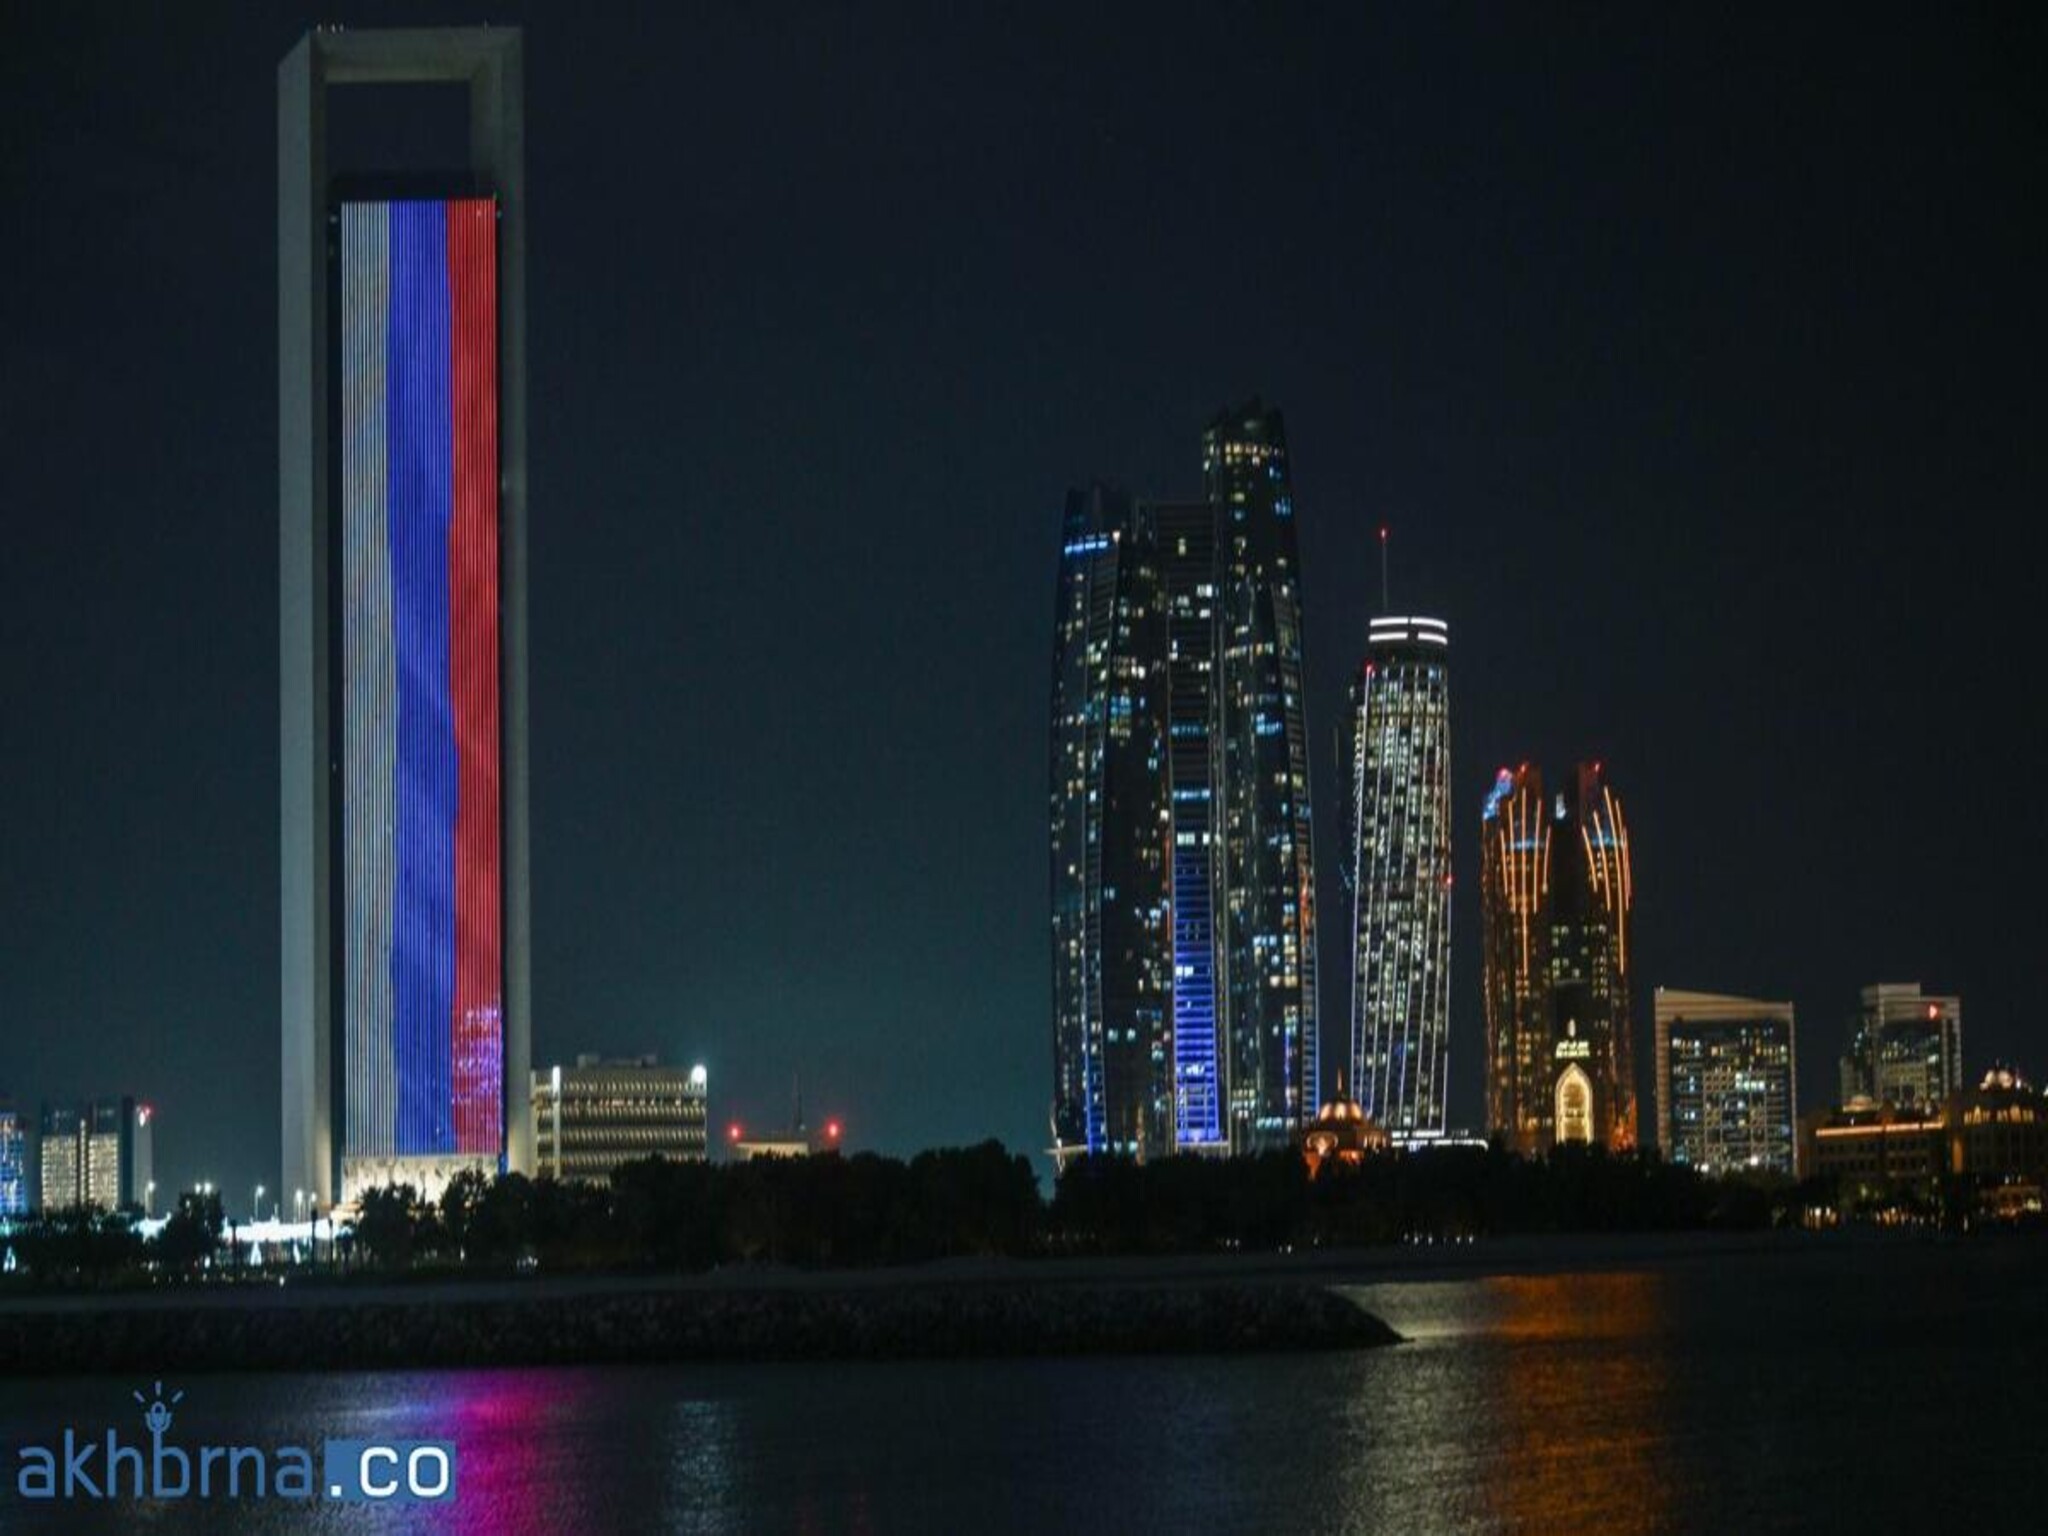 UAE landmarks illuminate Russian flag in solidarity with victims of terrorism